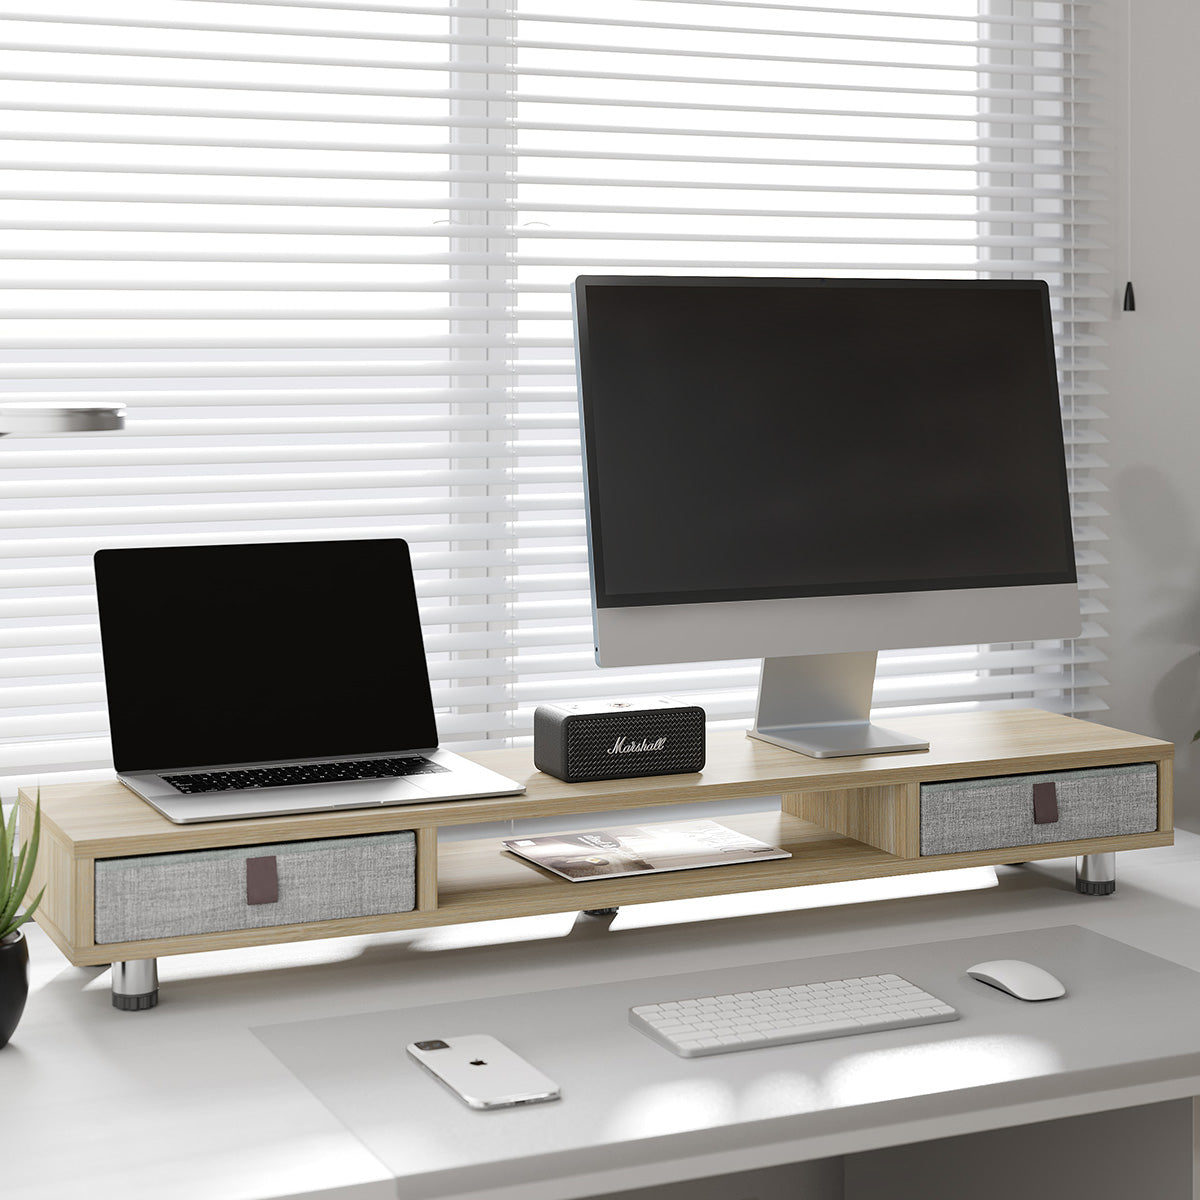 Desk Shelf / Monitor Stand